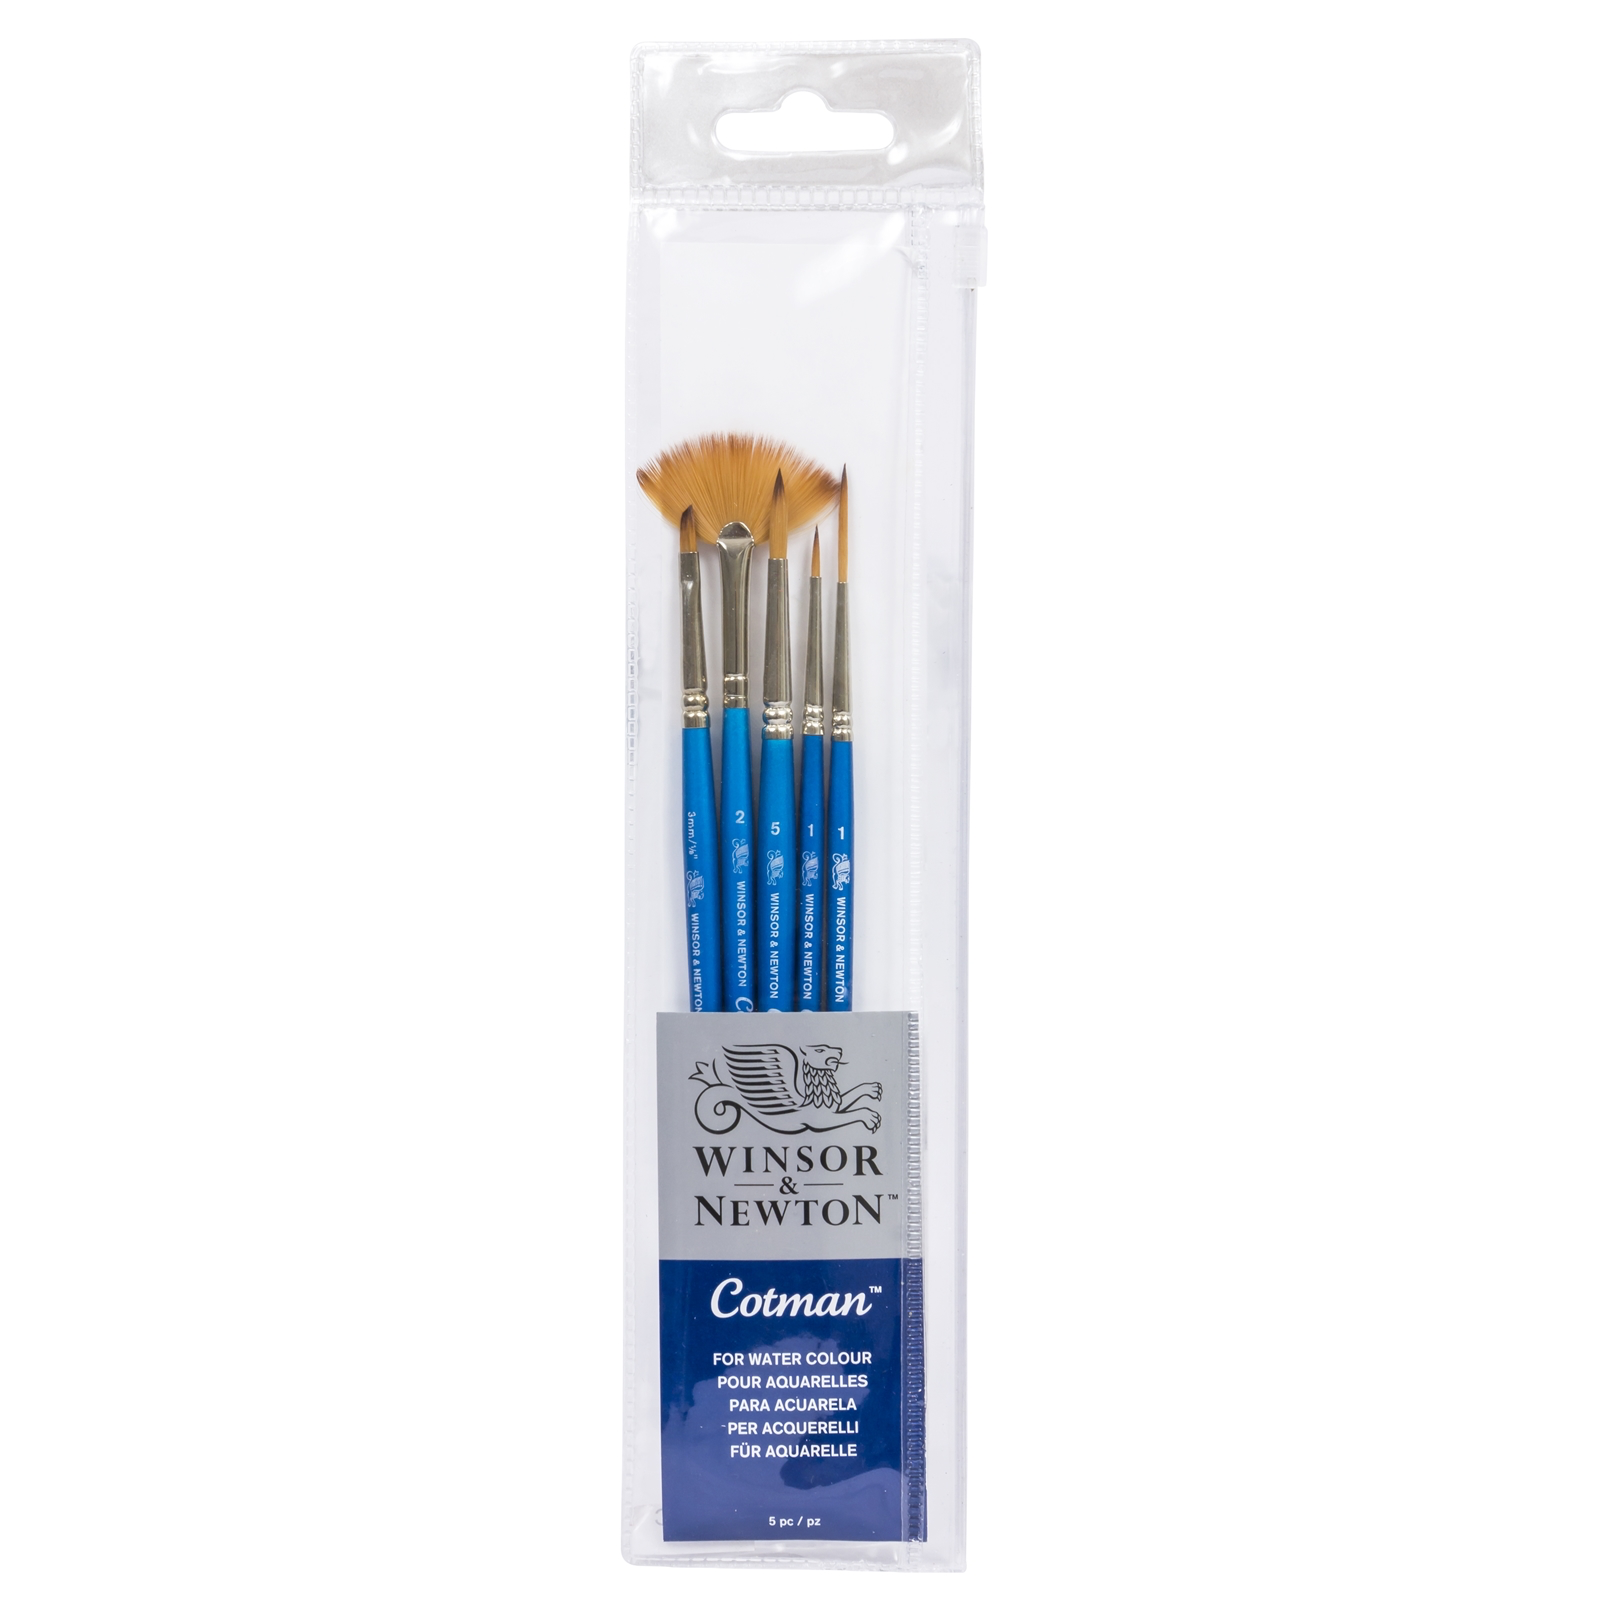 Winsor & Newton Cotman Watercolour Brush set of 5